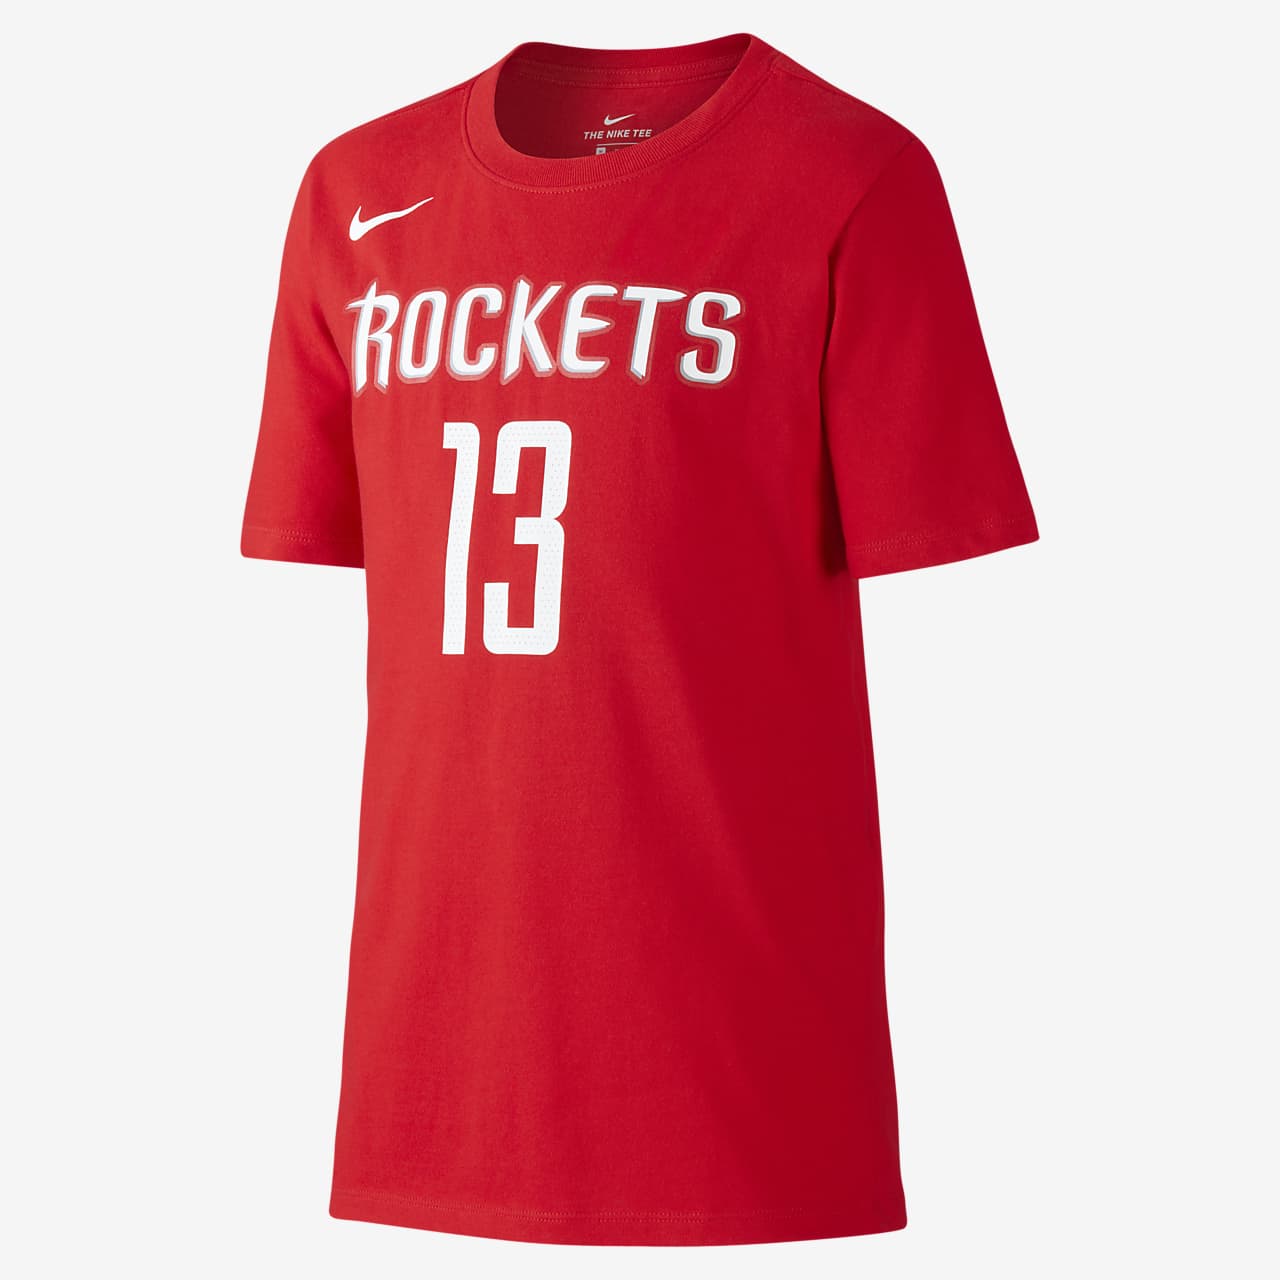 Nike Icon NBA Rockets (Harden 